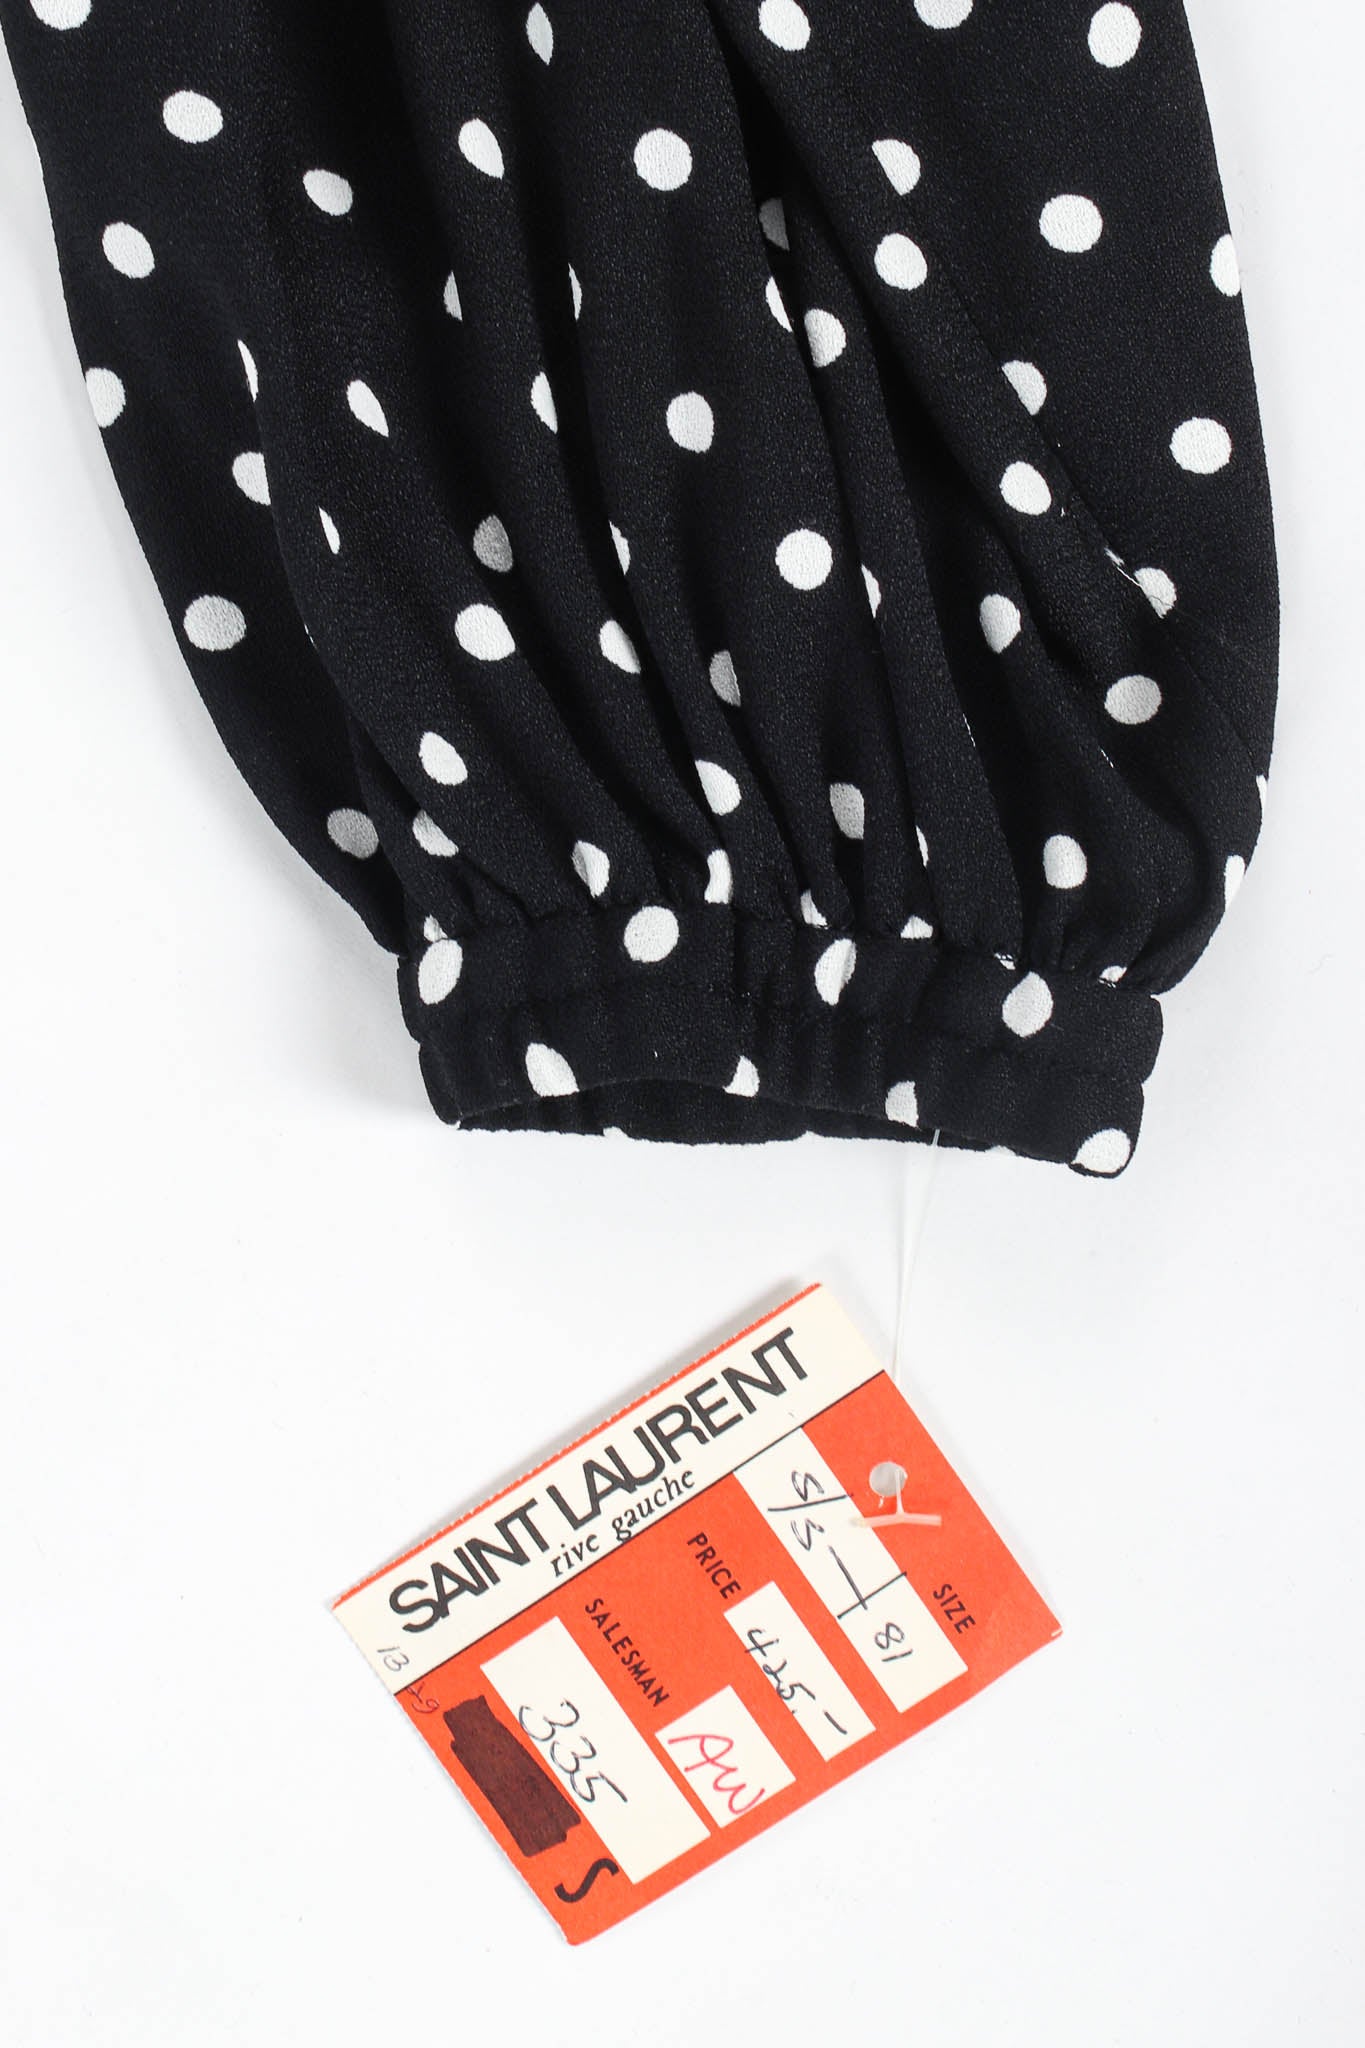 Vintage Saint Laurent 1981 S/S Polka Dot Carwash Pleat Dress original tag @ Recess Los Angeles